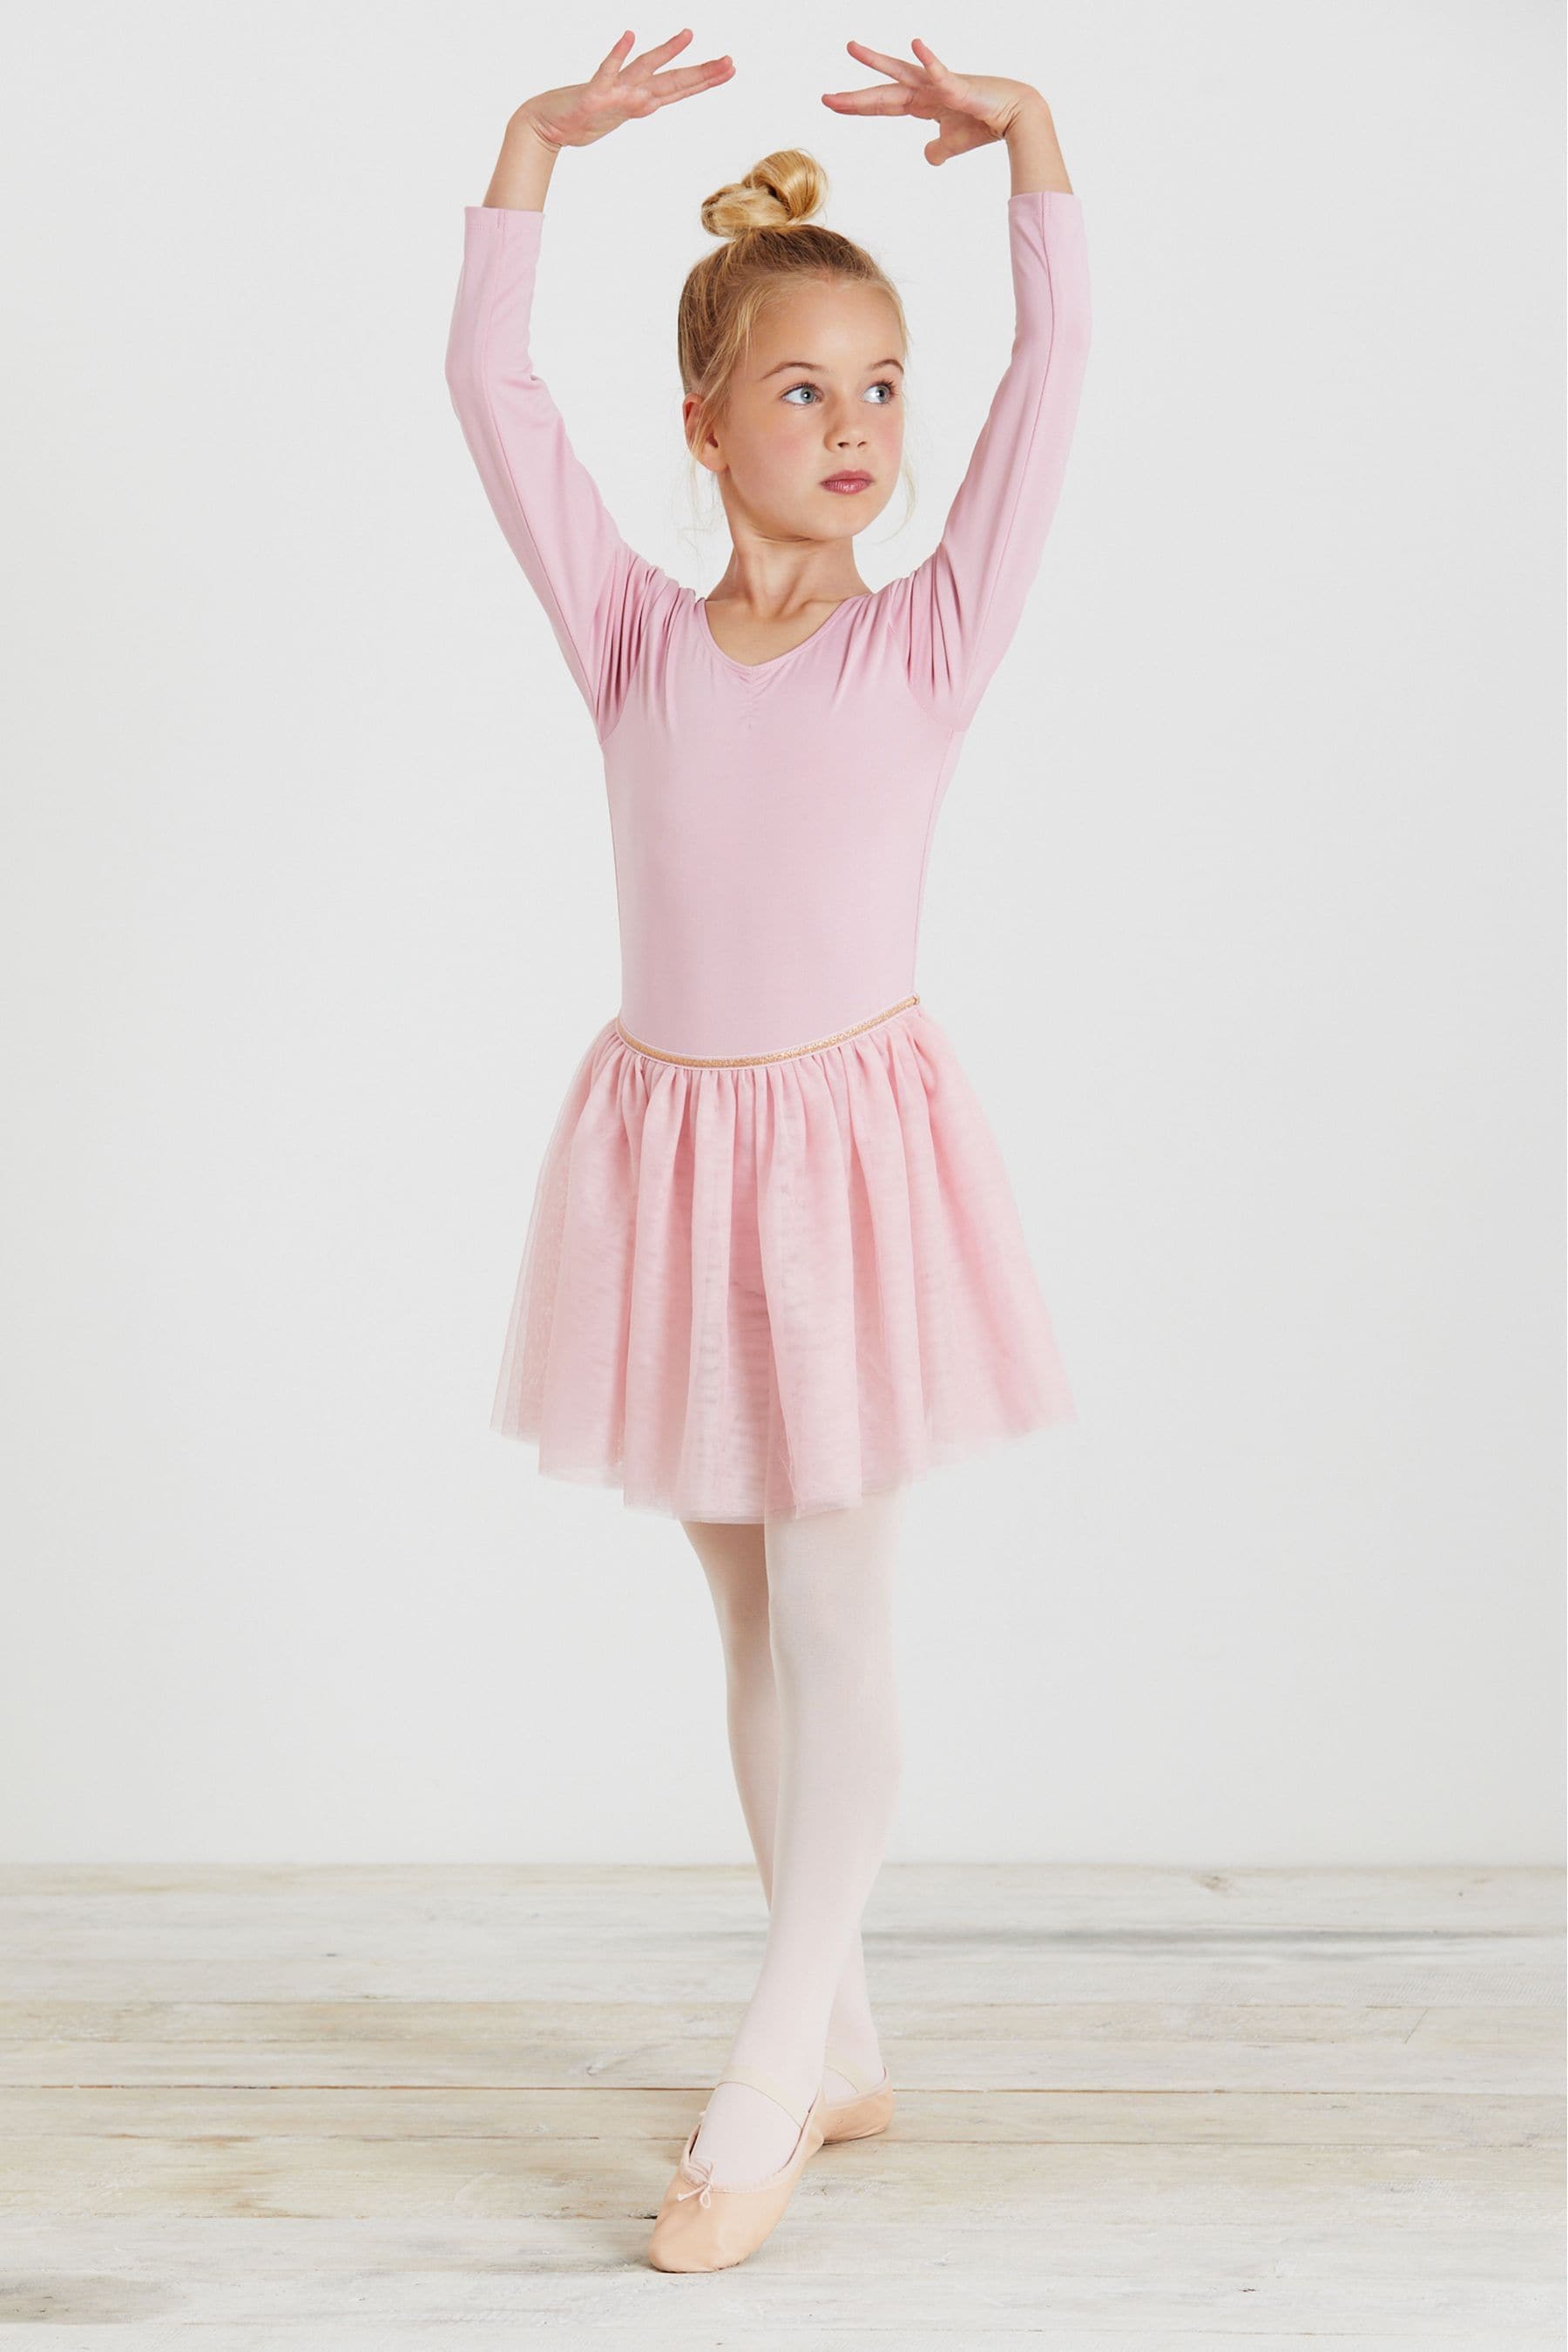 Capezio Fairy Petal Tutu Skirt  Just Ballet